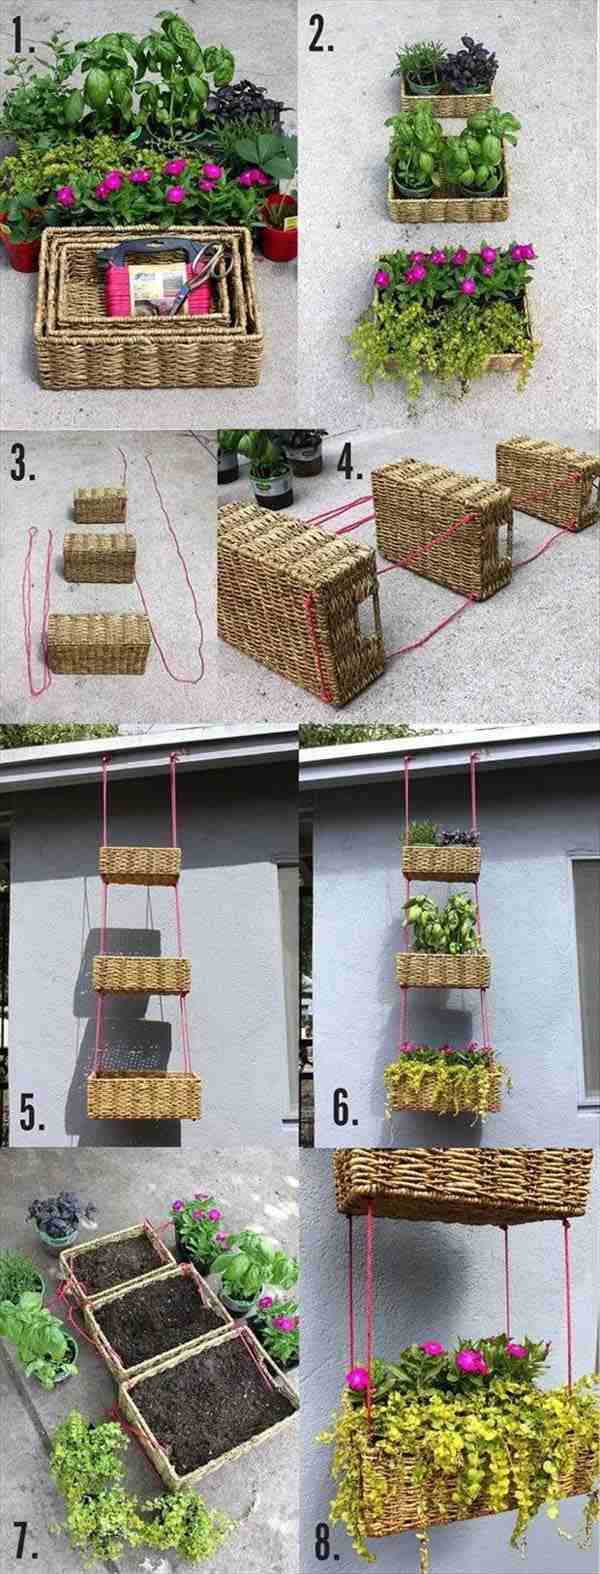 outdoor decoration ideas crafts tutorials hanging baskets planters